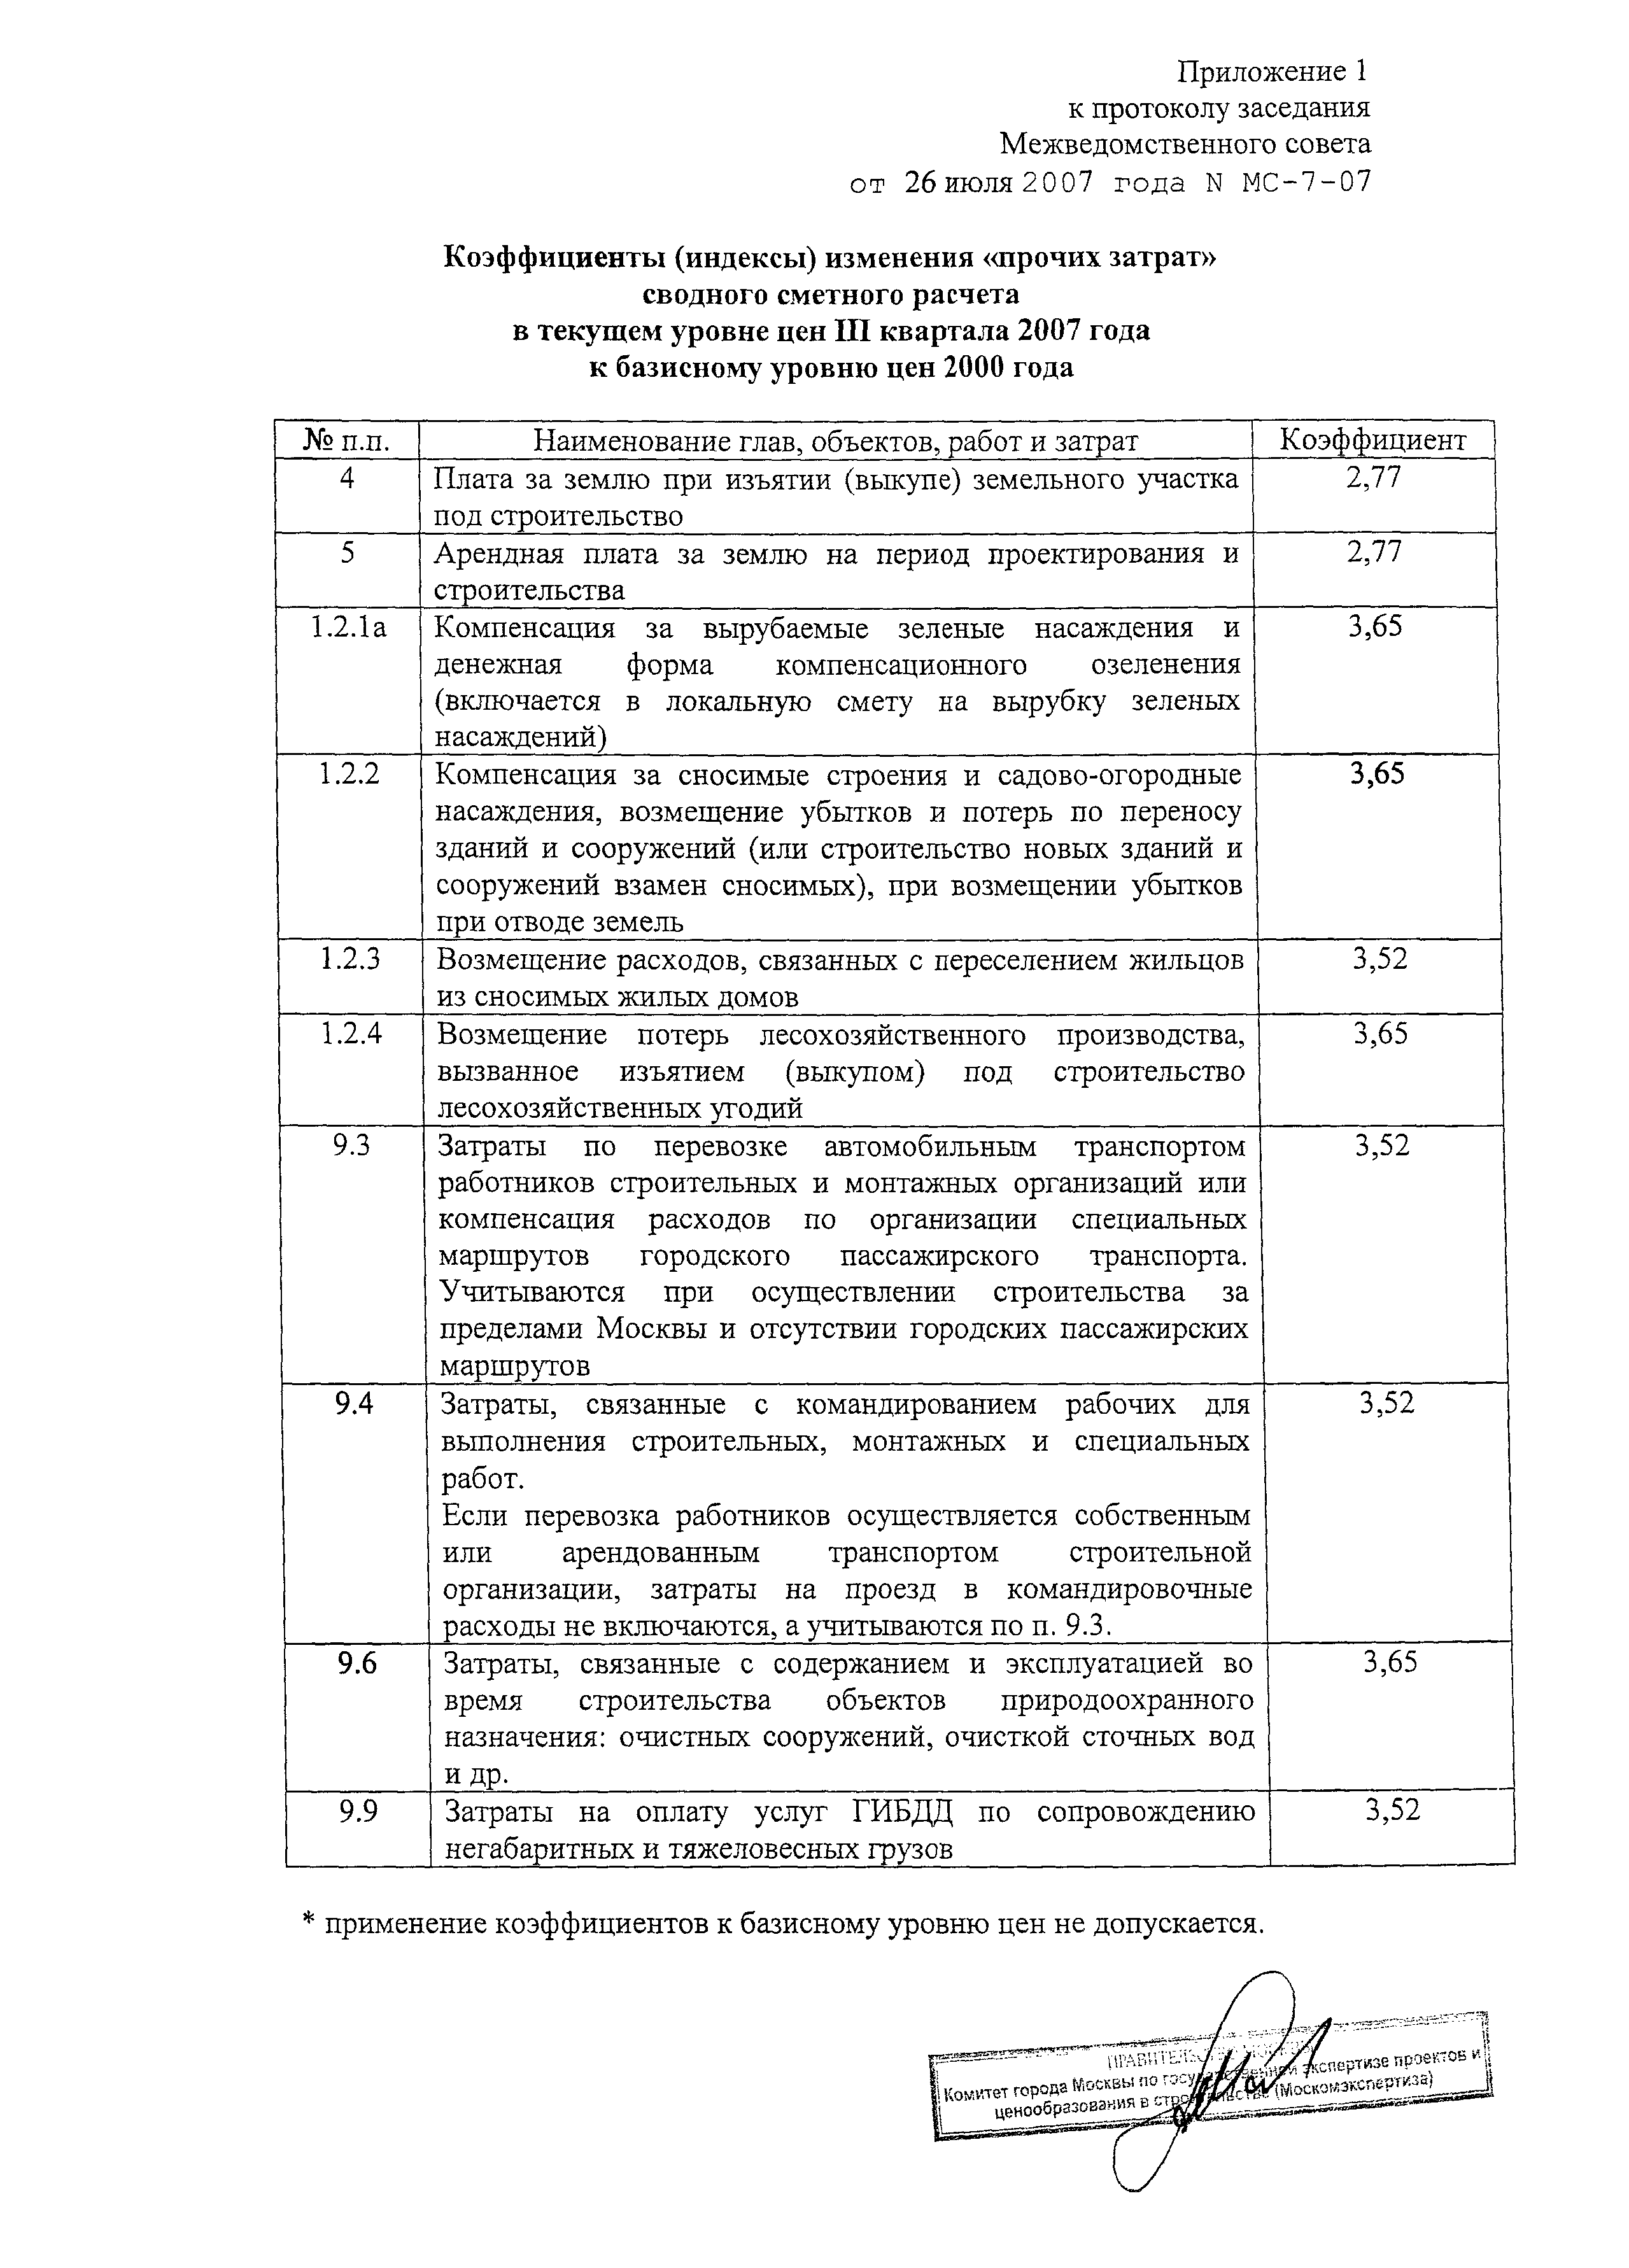 Протокол МС-7-07